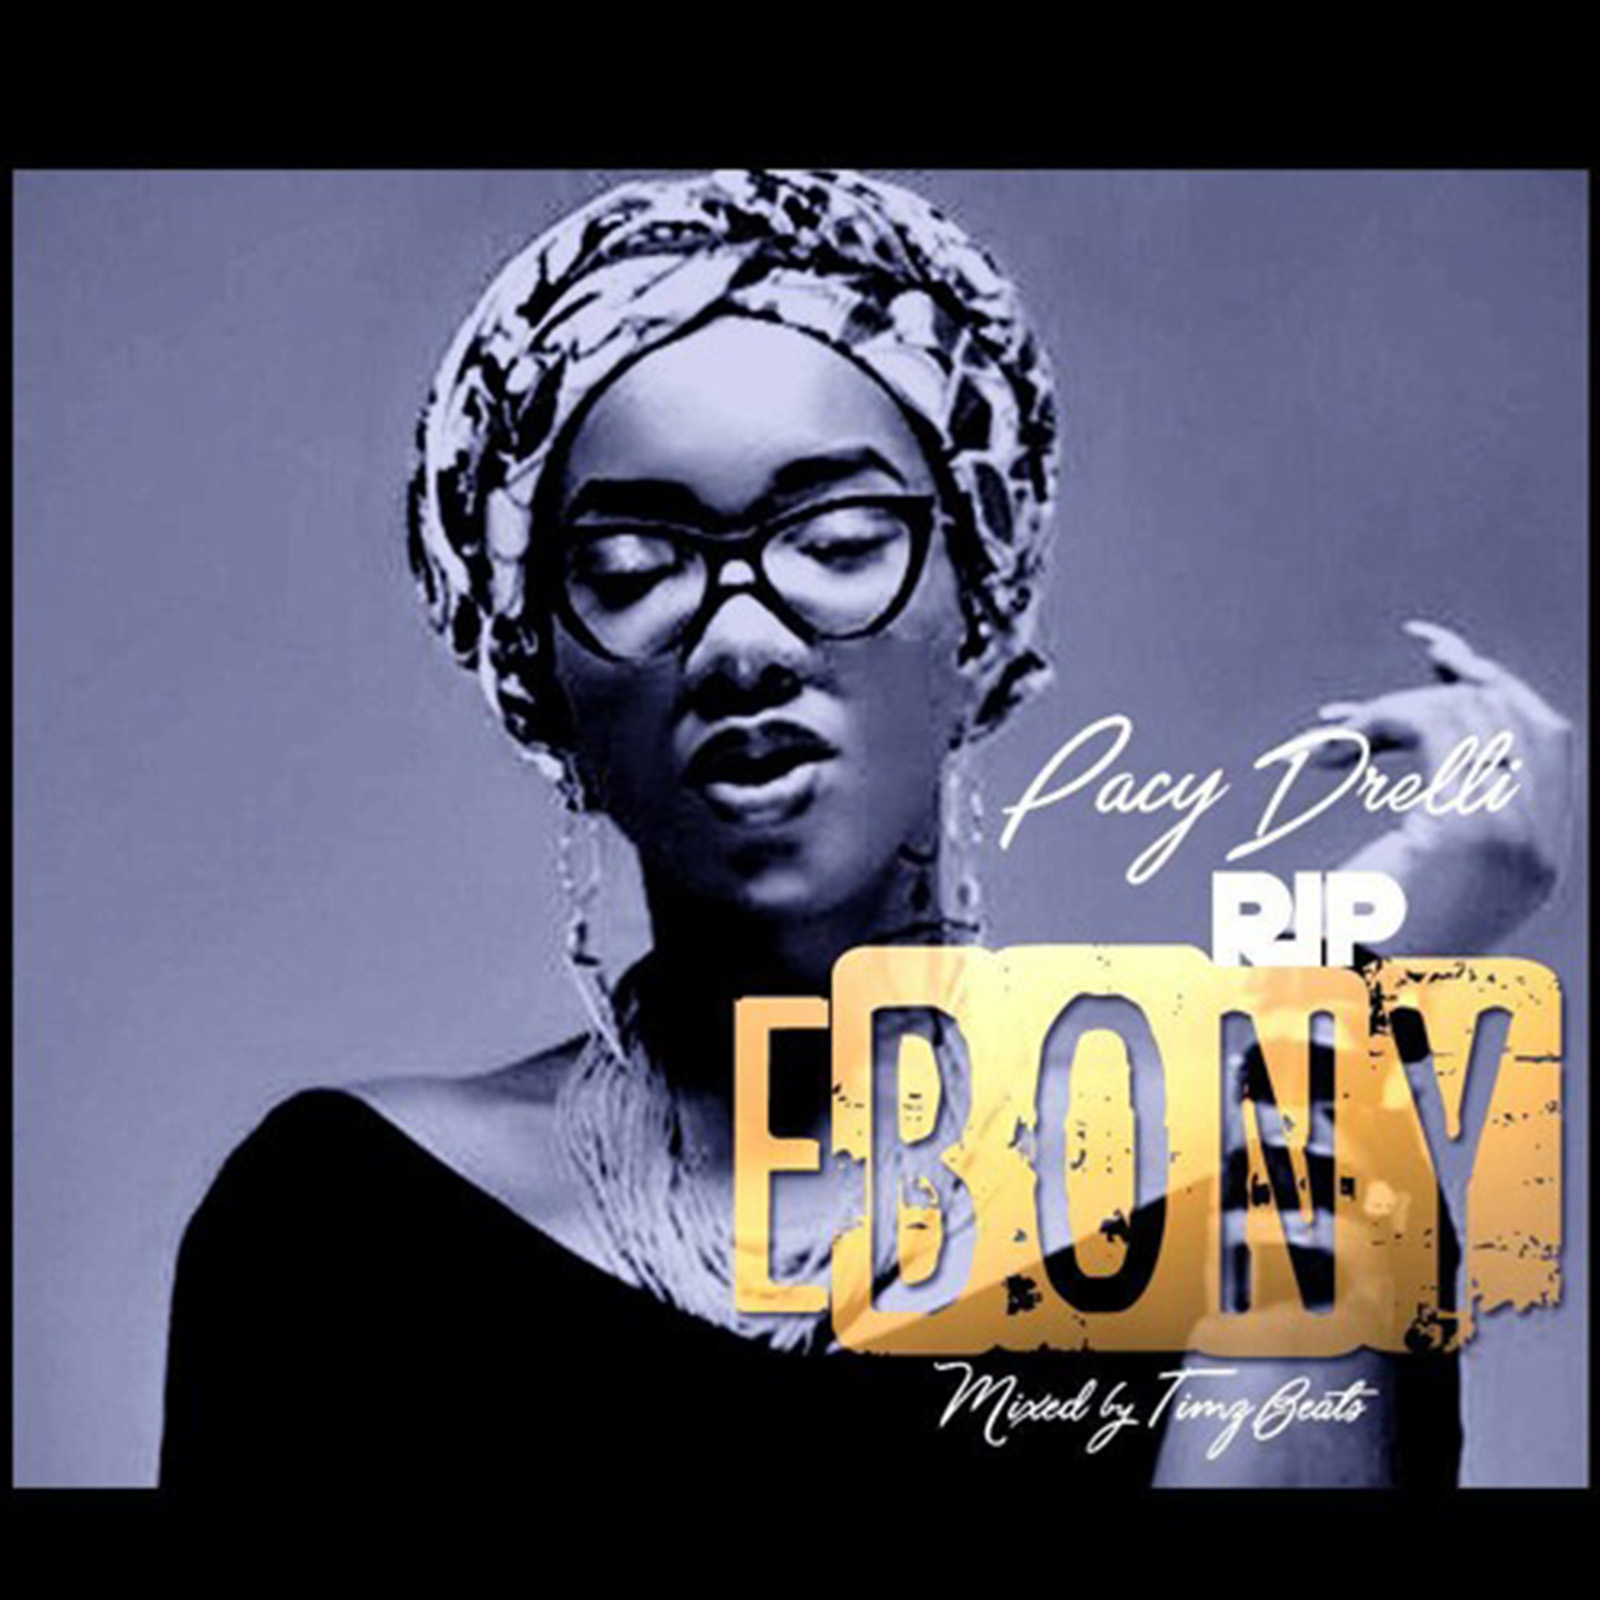 RIP Ebony by Pacy Drelli